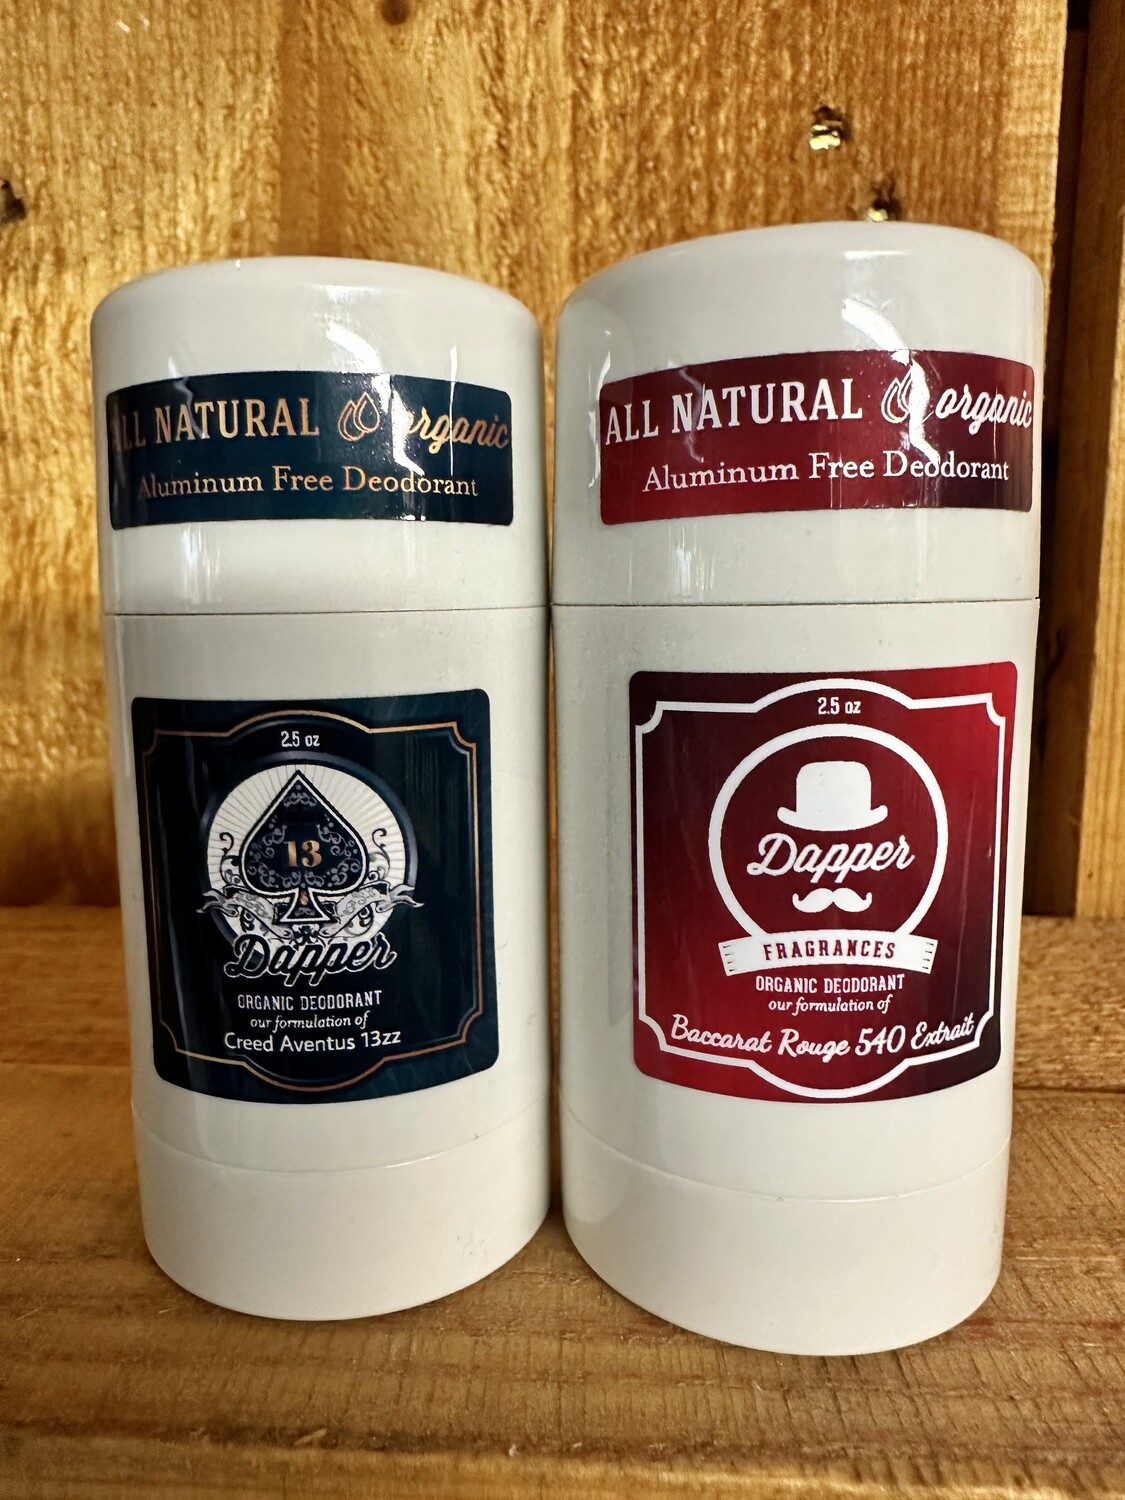 All Natural Organic Deodorant